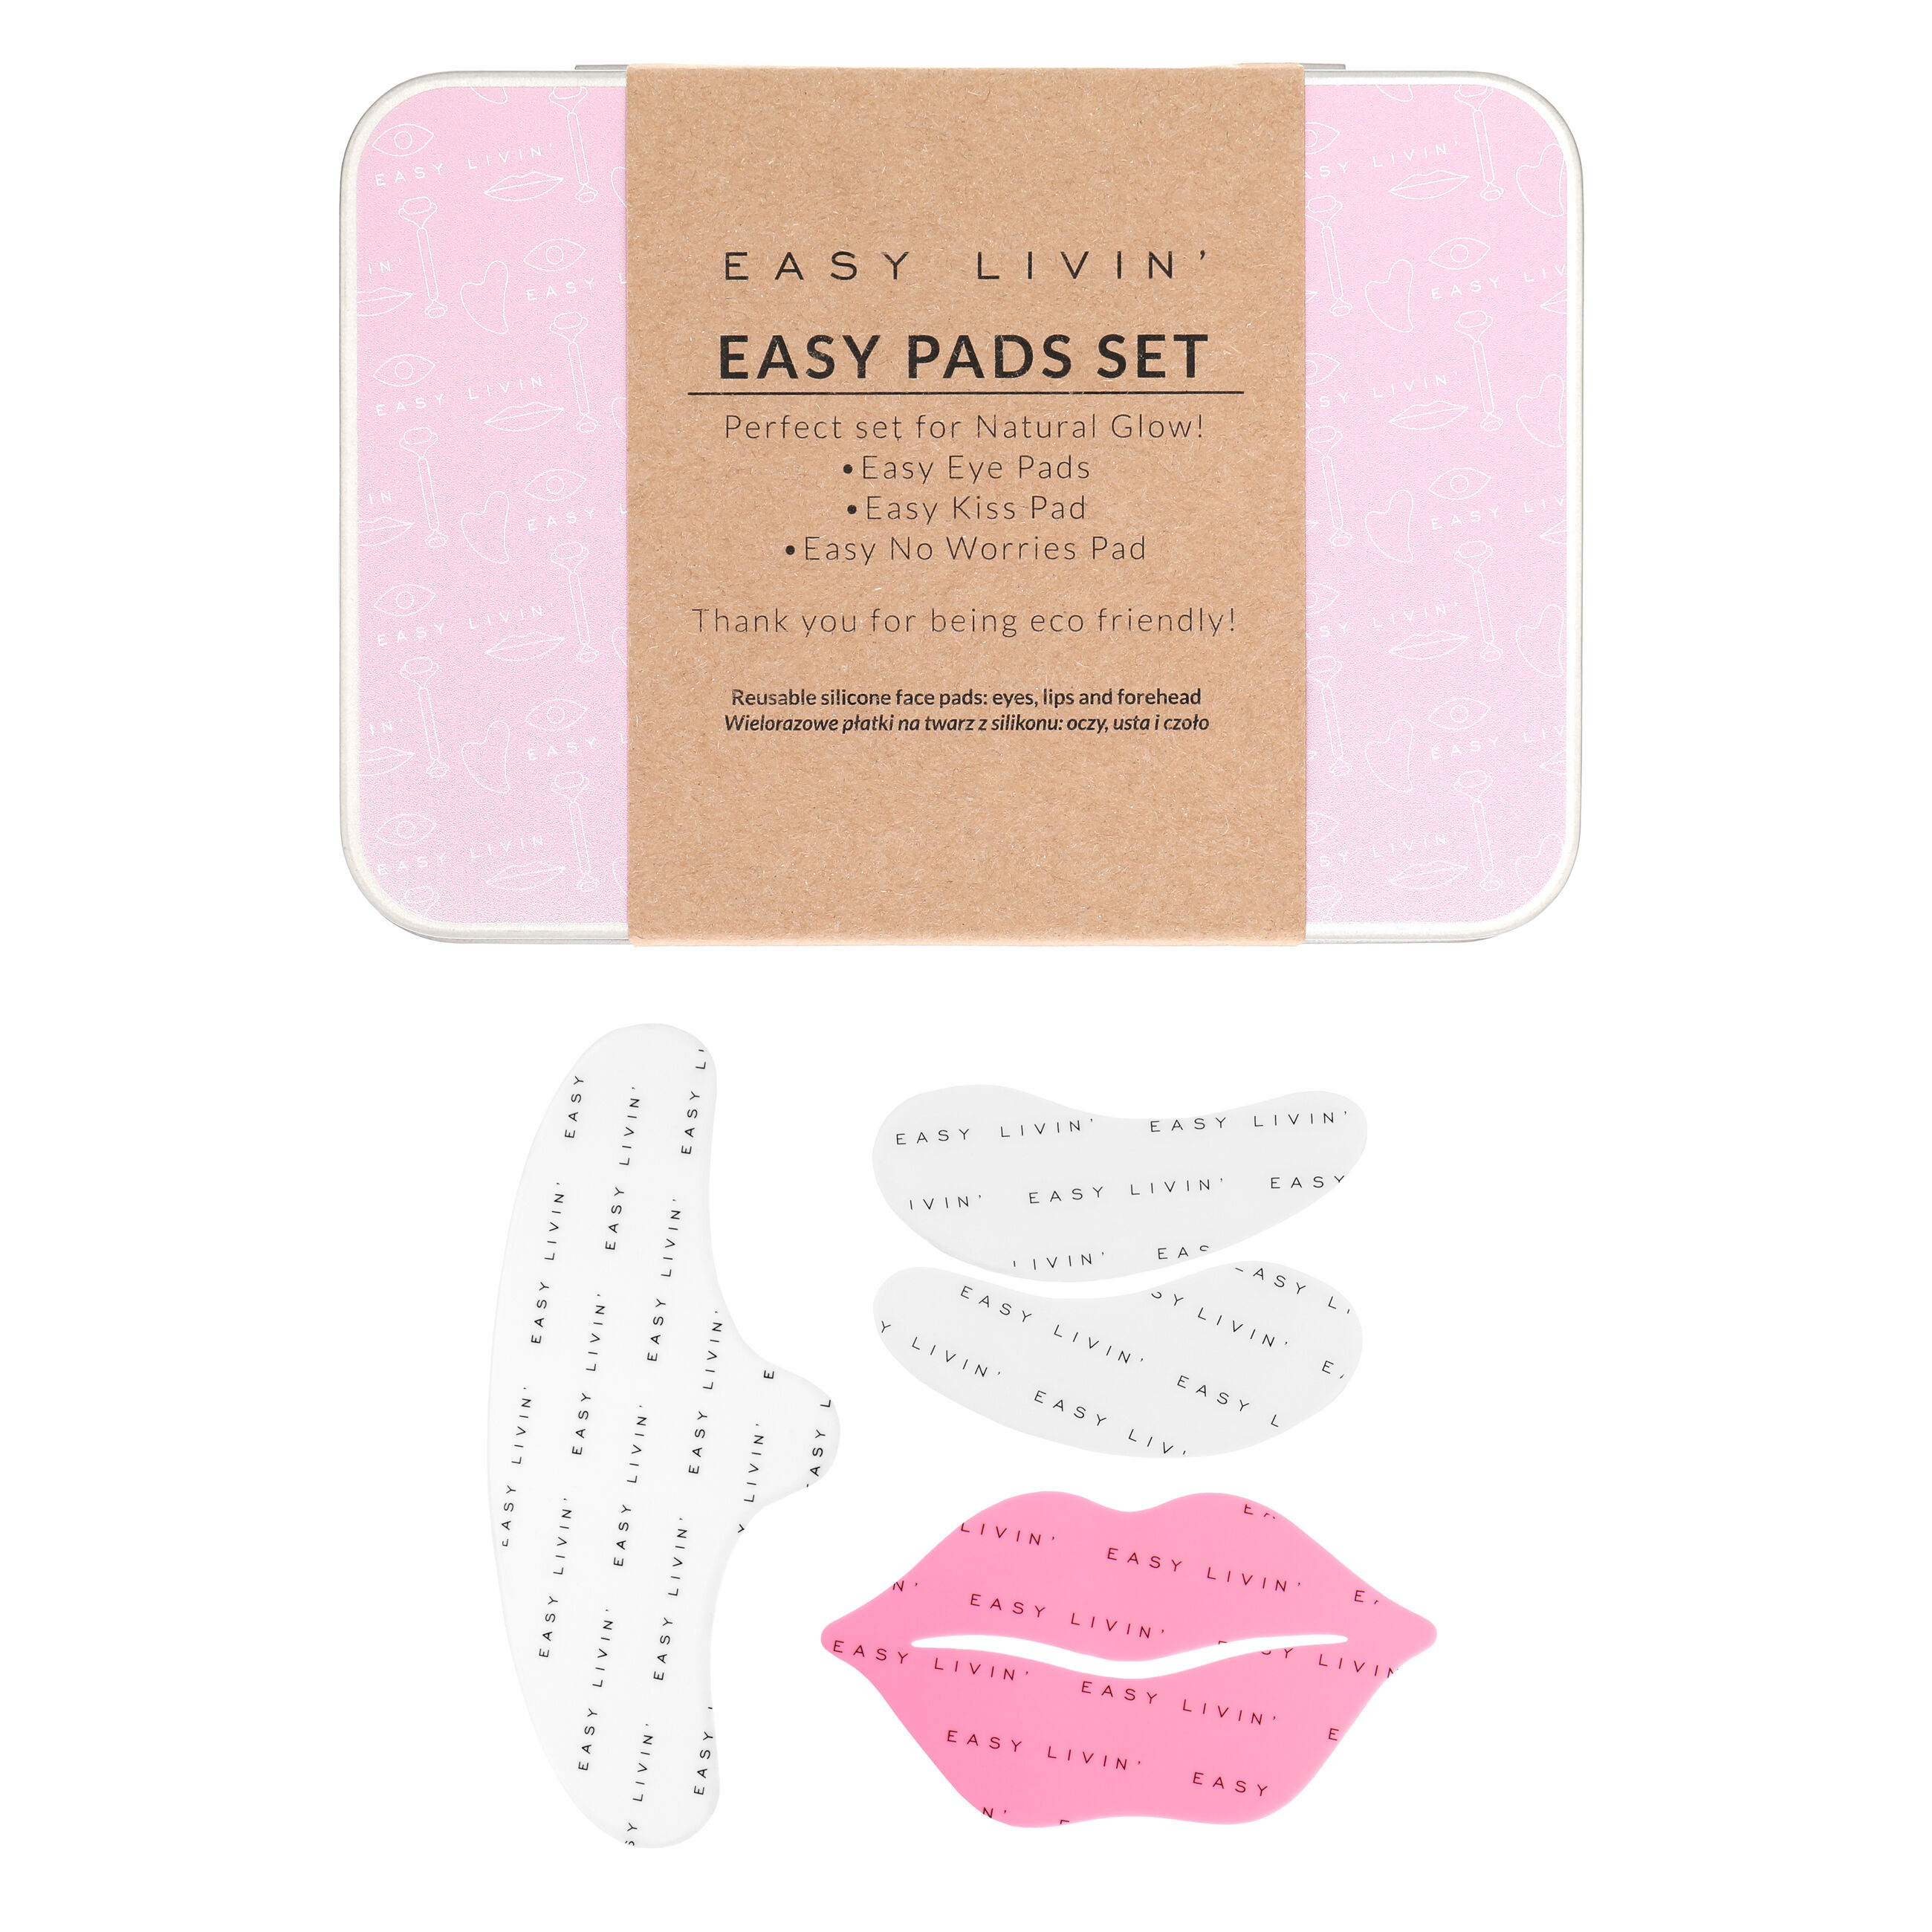 Easy Livin' Комплект Easy Pads: многоразовая подушечка для губ, 1 шт., многоразовая подушечка для лба, 1 шт., многоразовая подушечка для глаз, 2 шт.